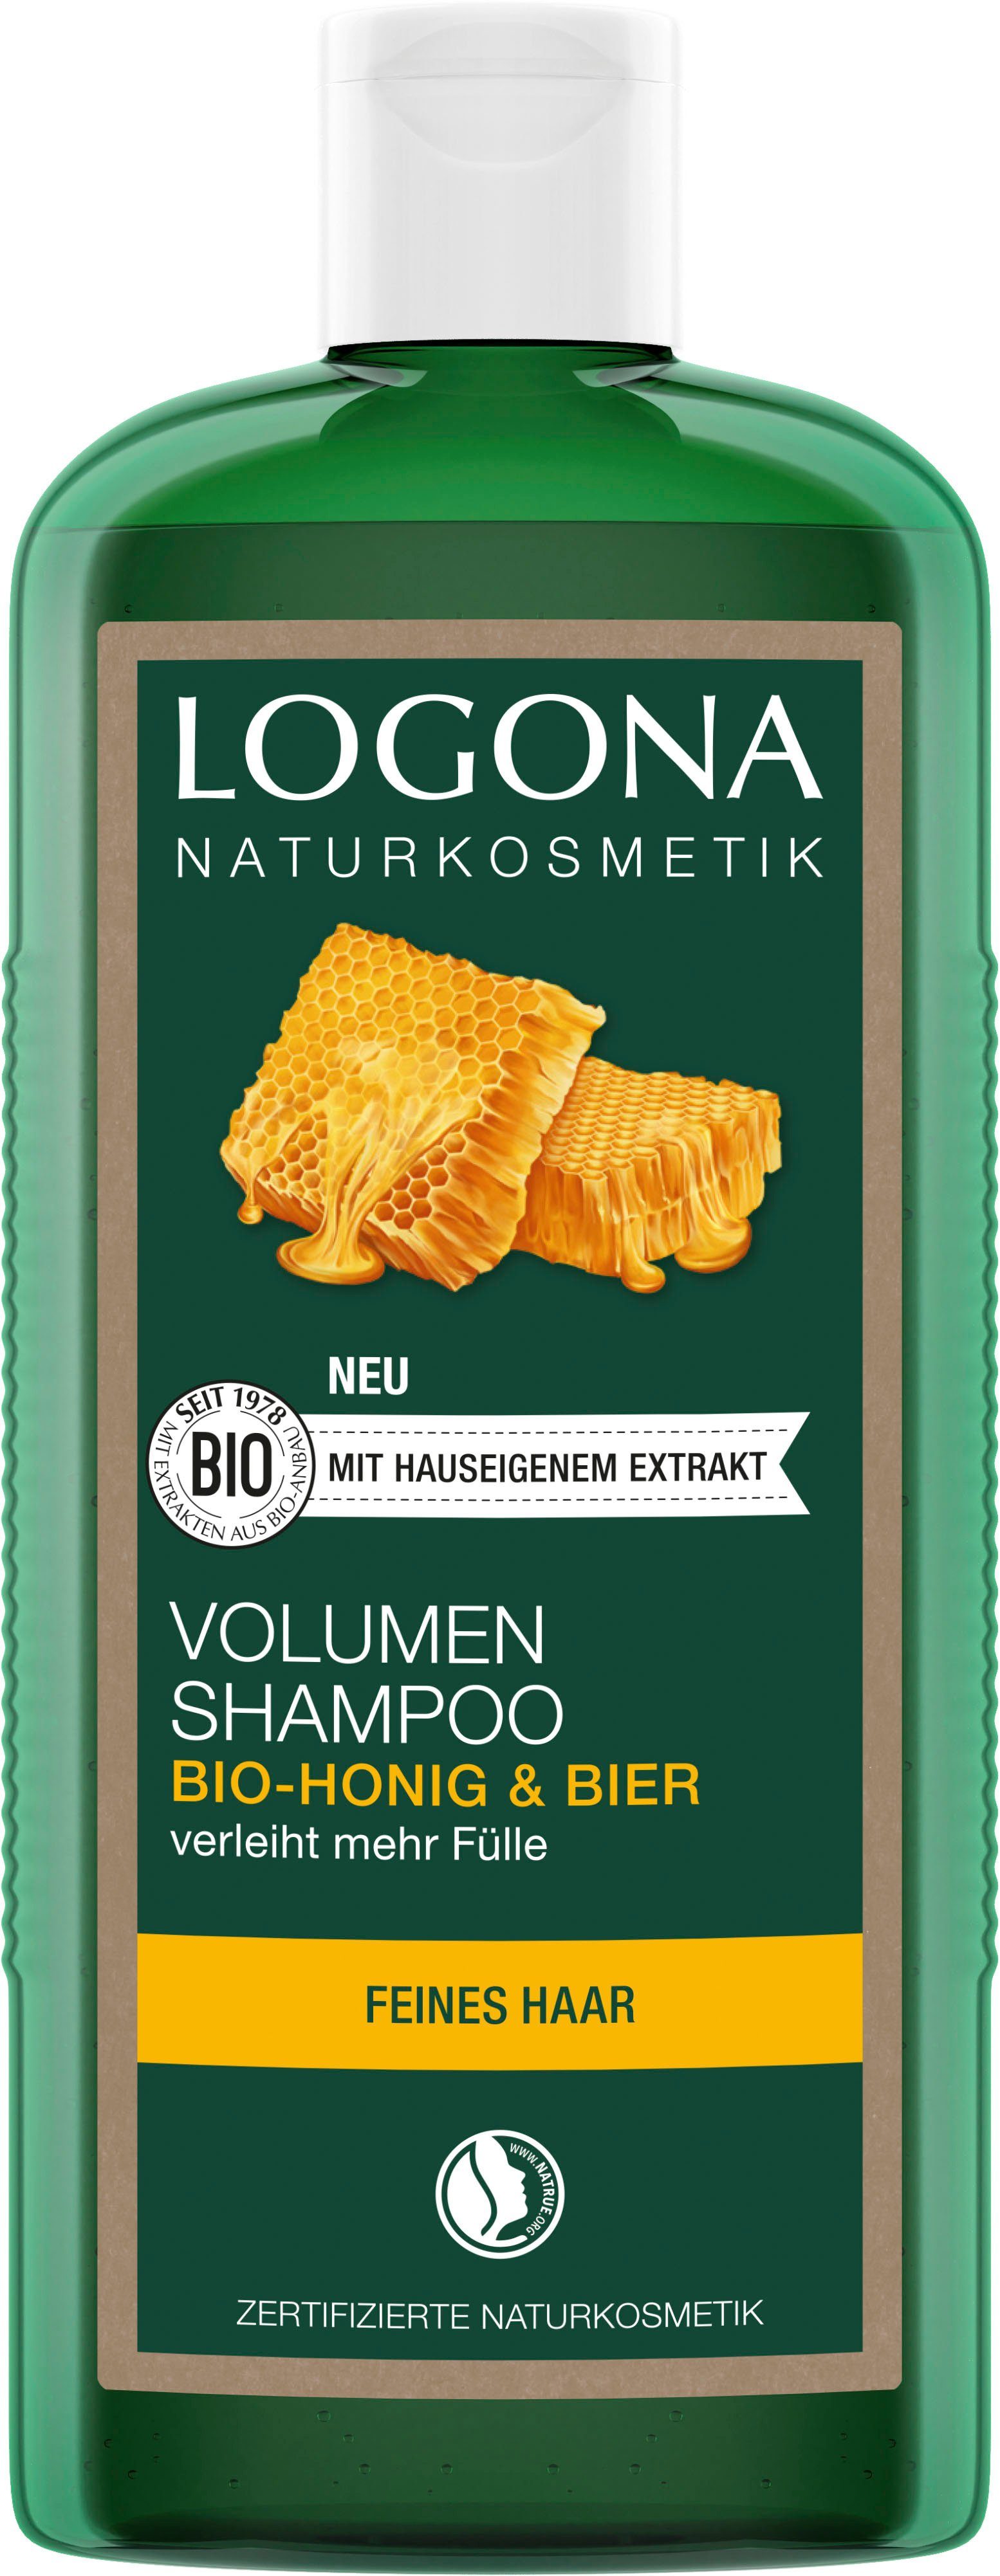 & Logona LOGONA Bio-Honig Haarshampoo Shampoo Volumen Bier